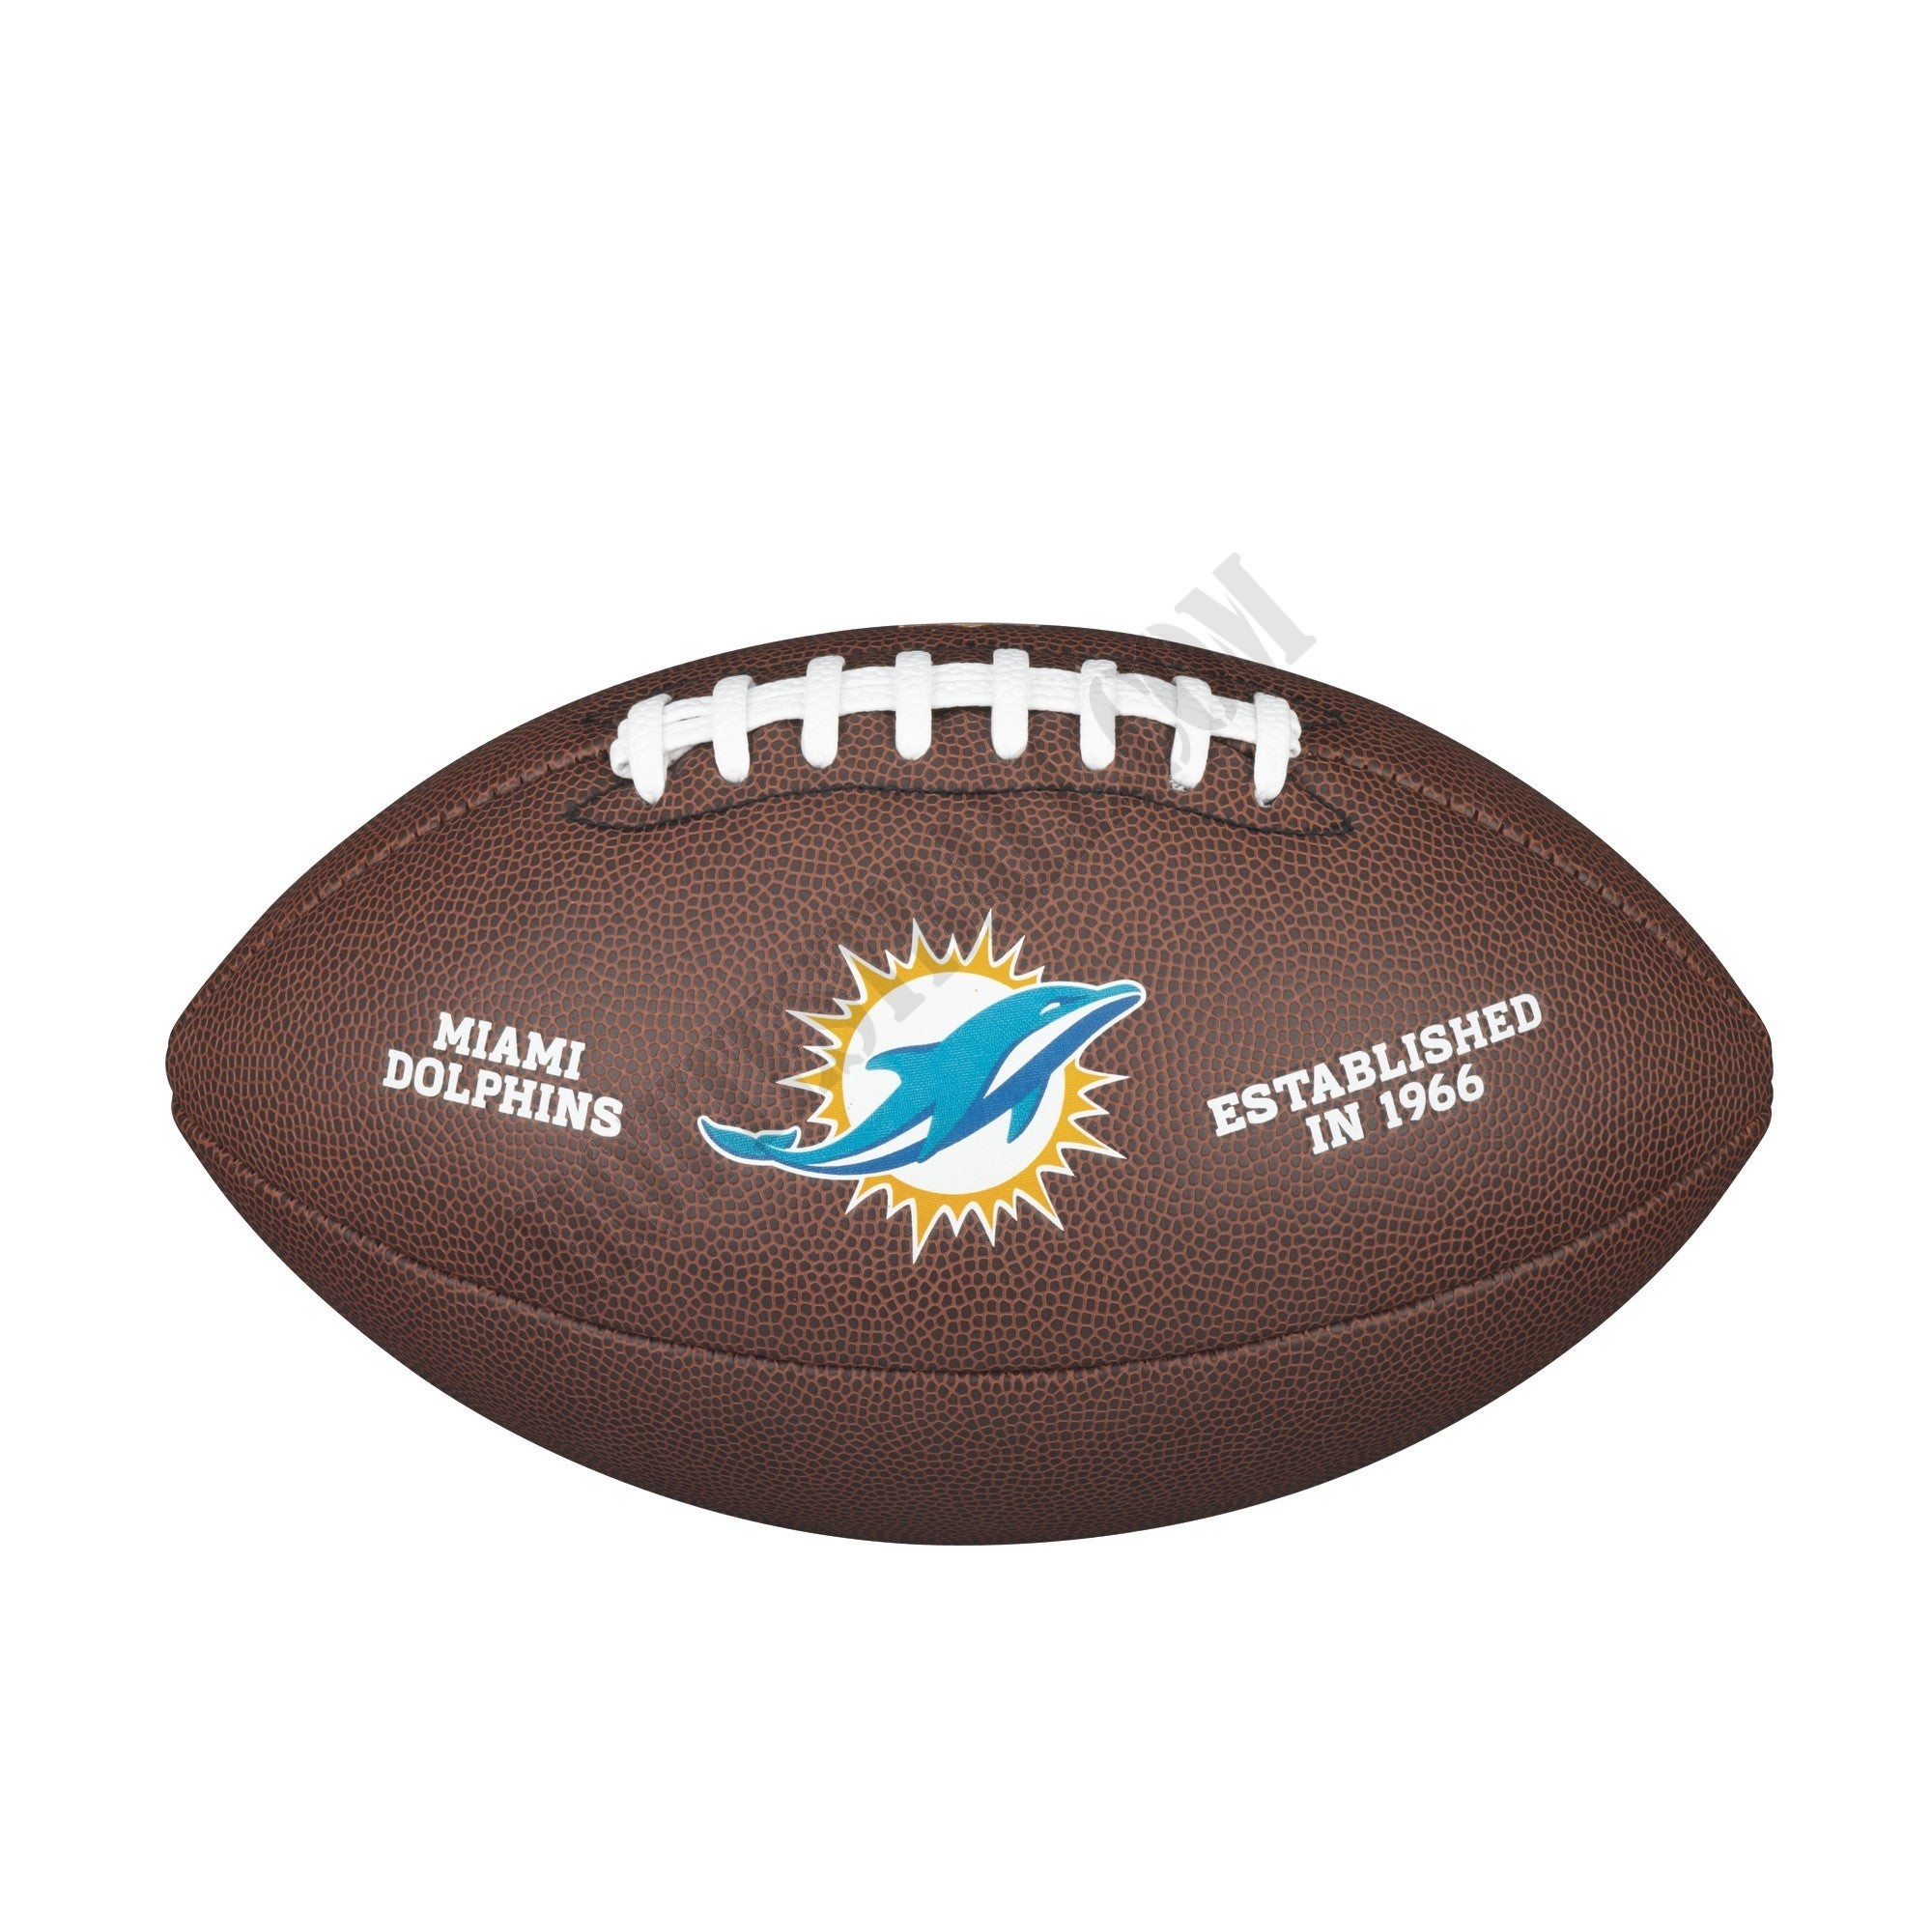 NFL Backyard Legend Football - Miami Dolphins ● Wilson Promotions - NFL Backyard Legend Football - Miami Dolphins ● Wilson Promotions